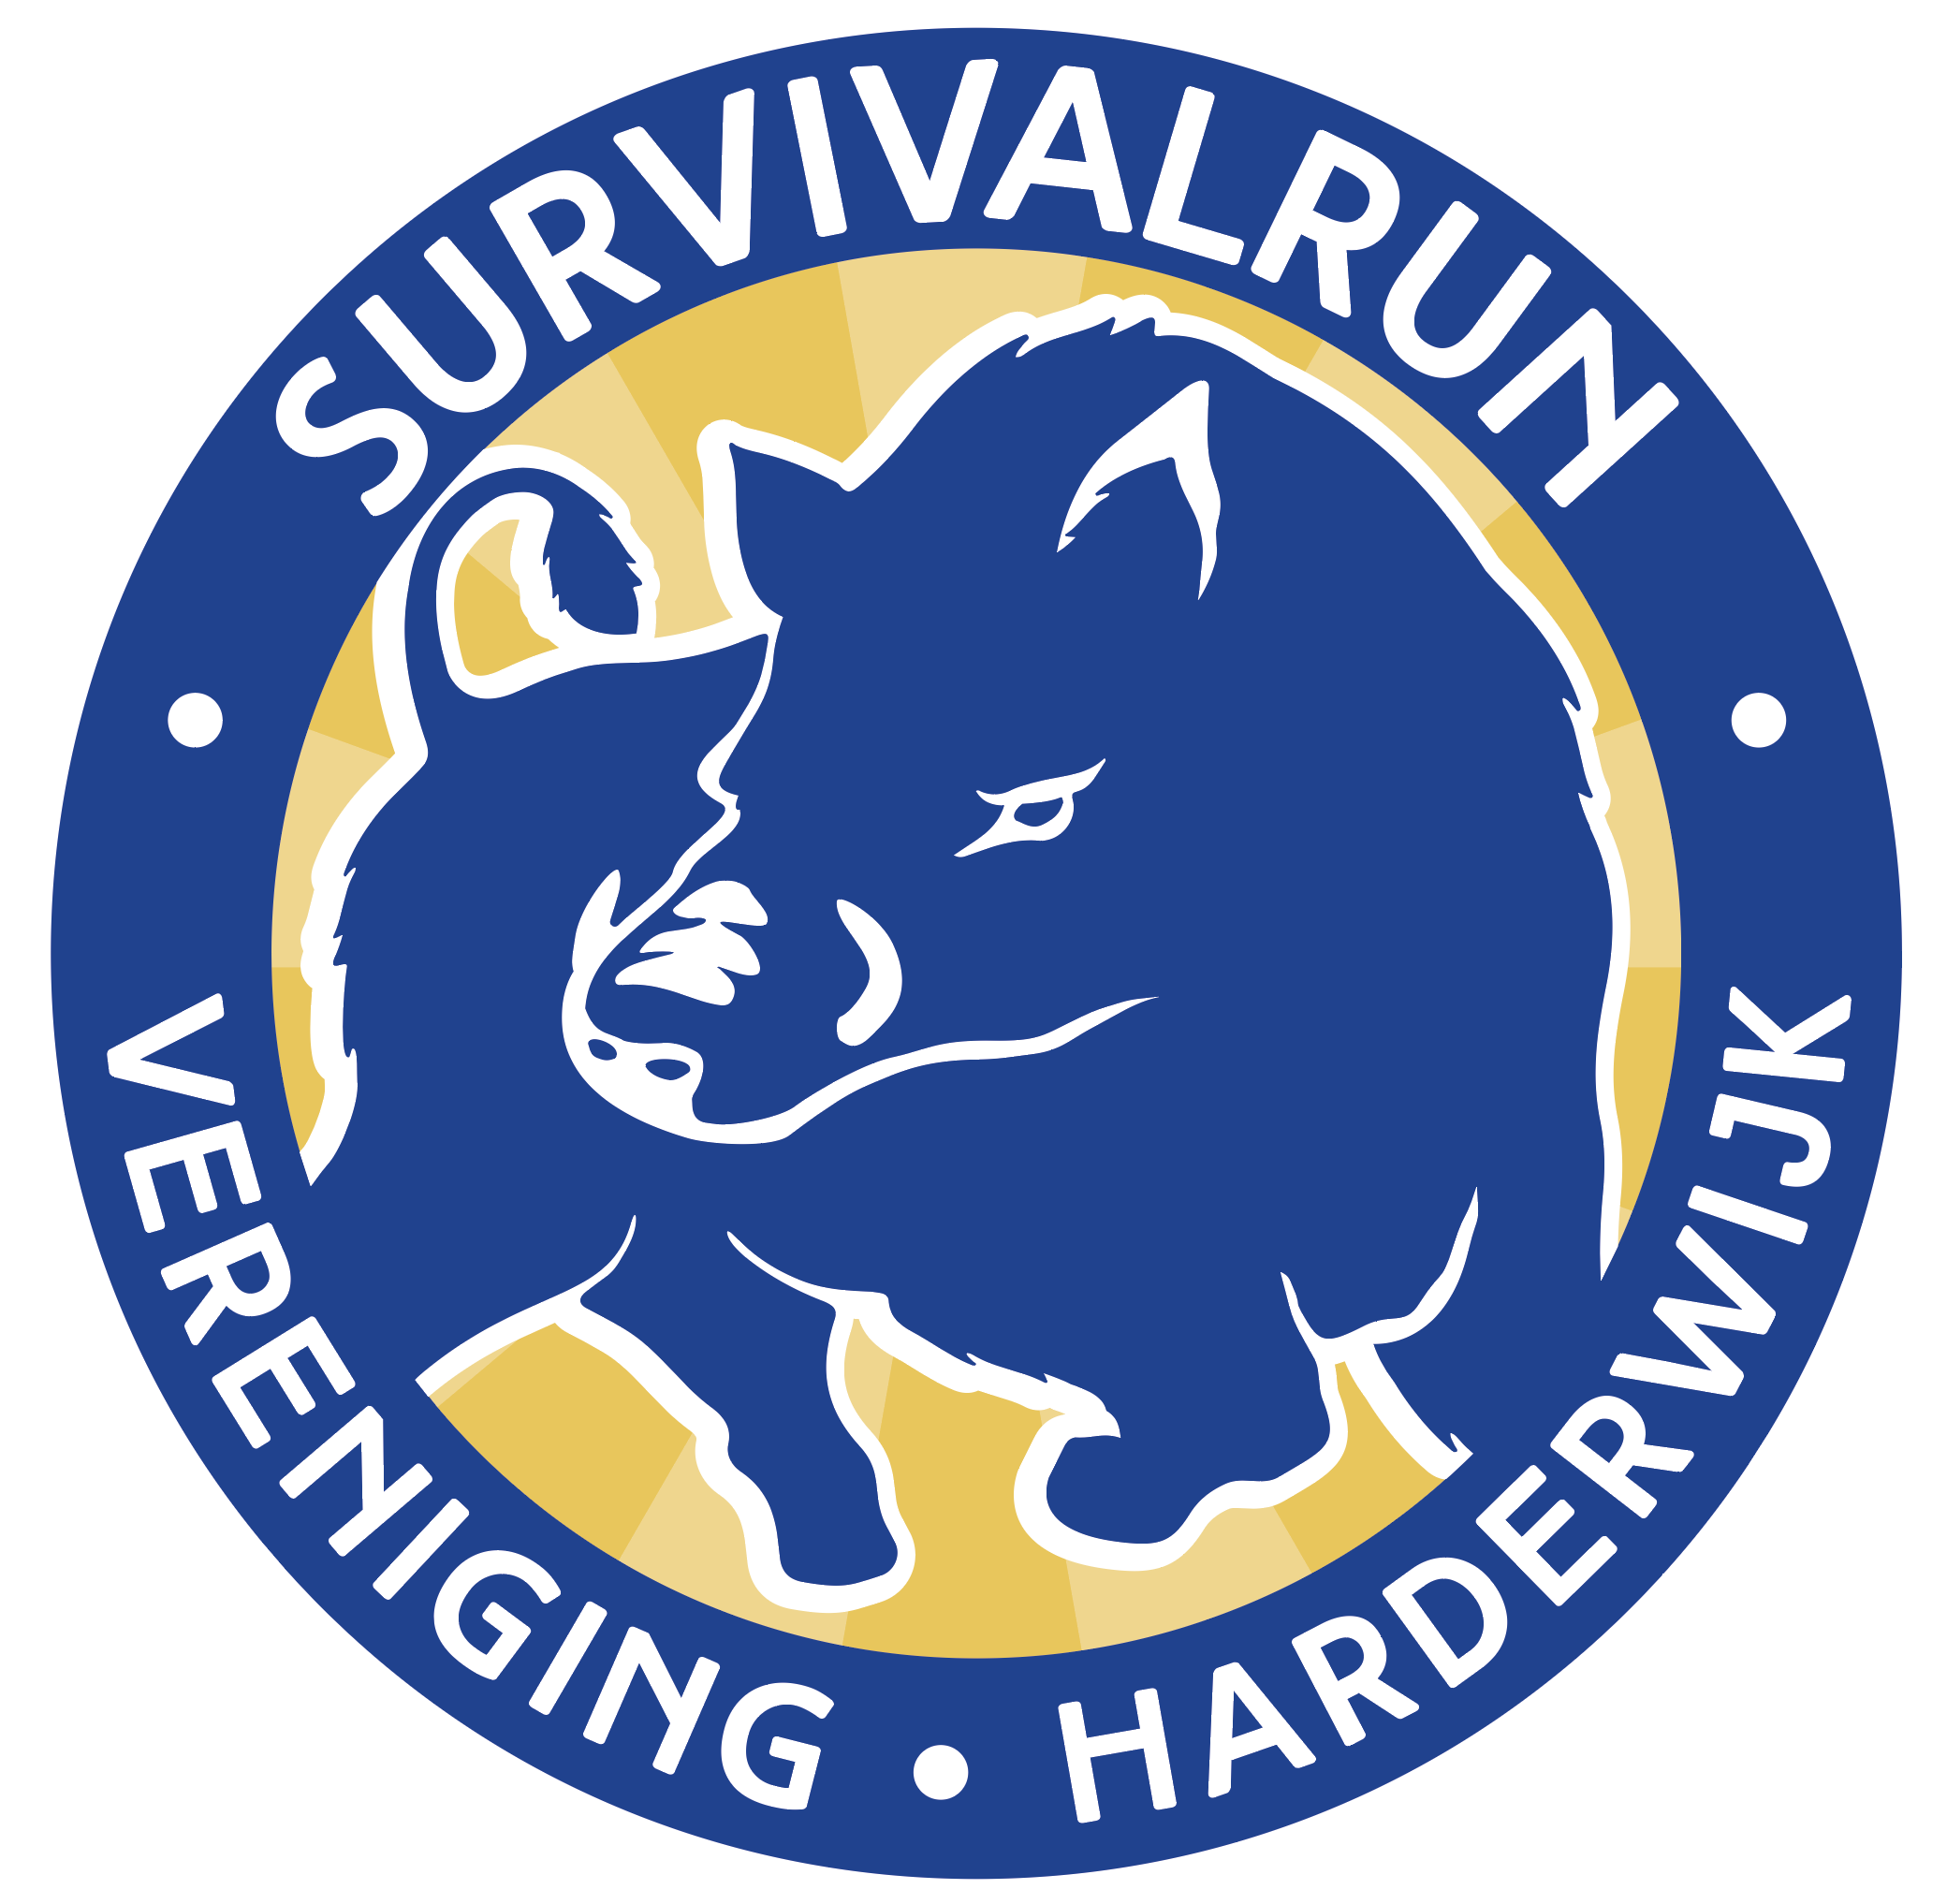 Survivalrun Vereniging Harderwijk